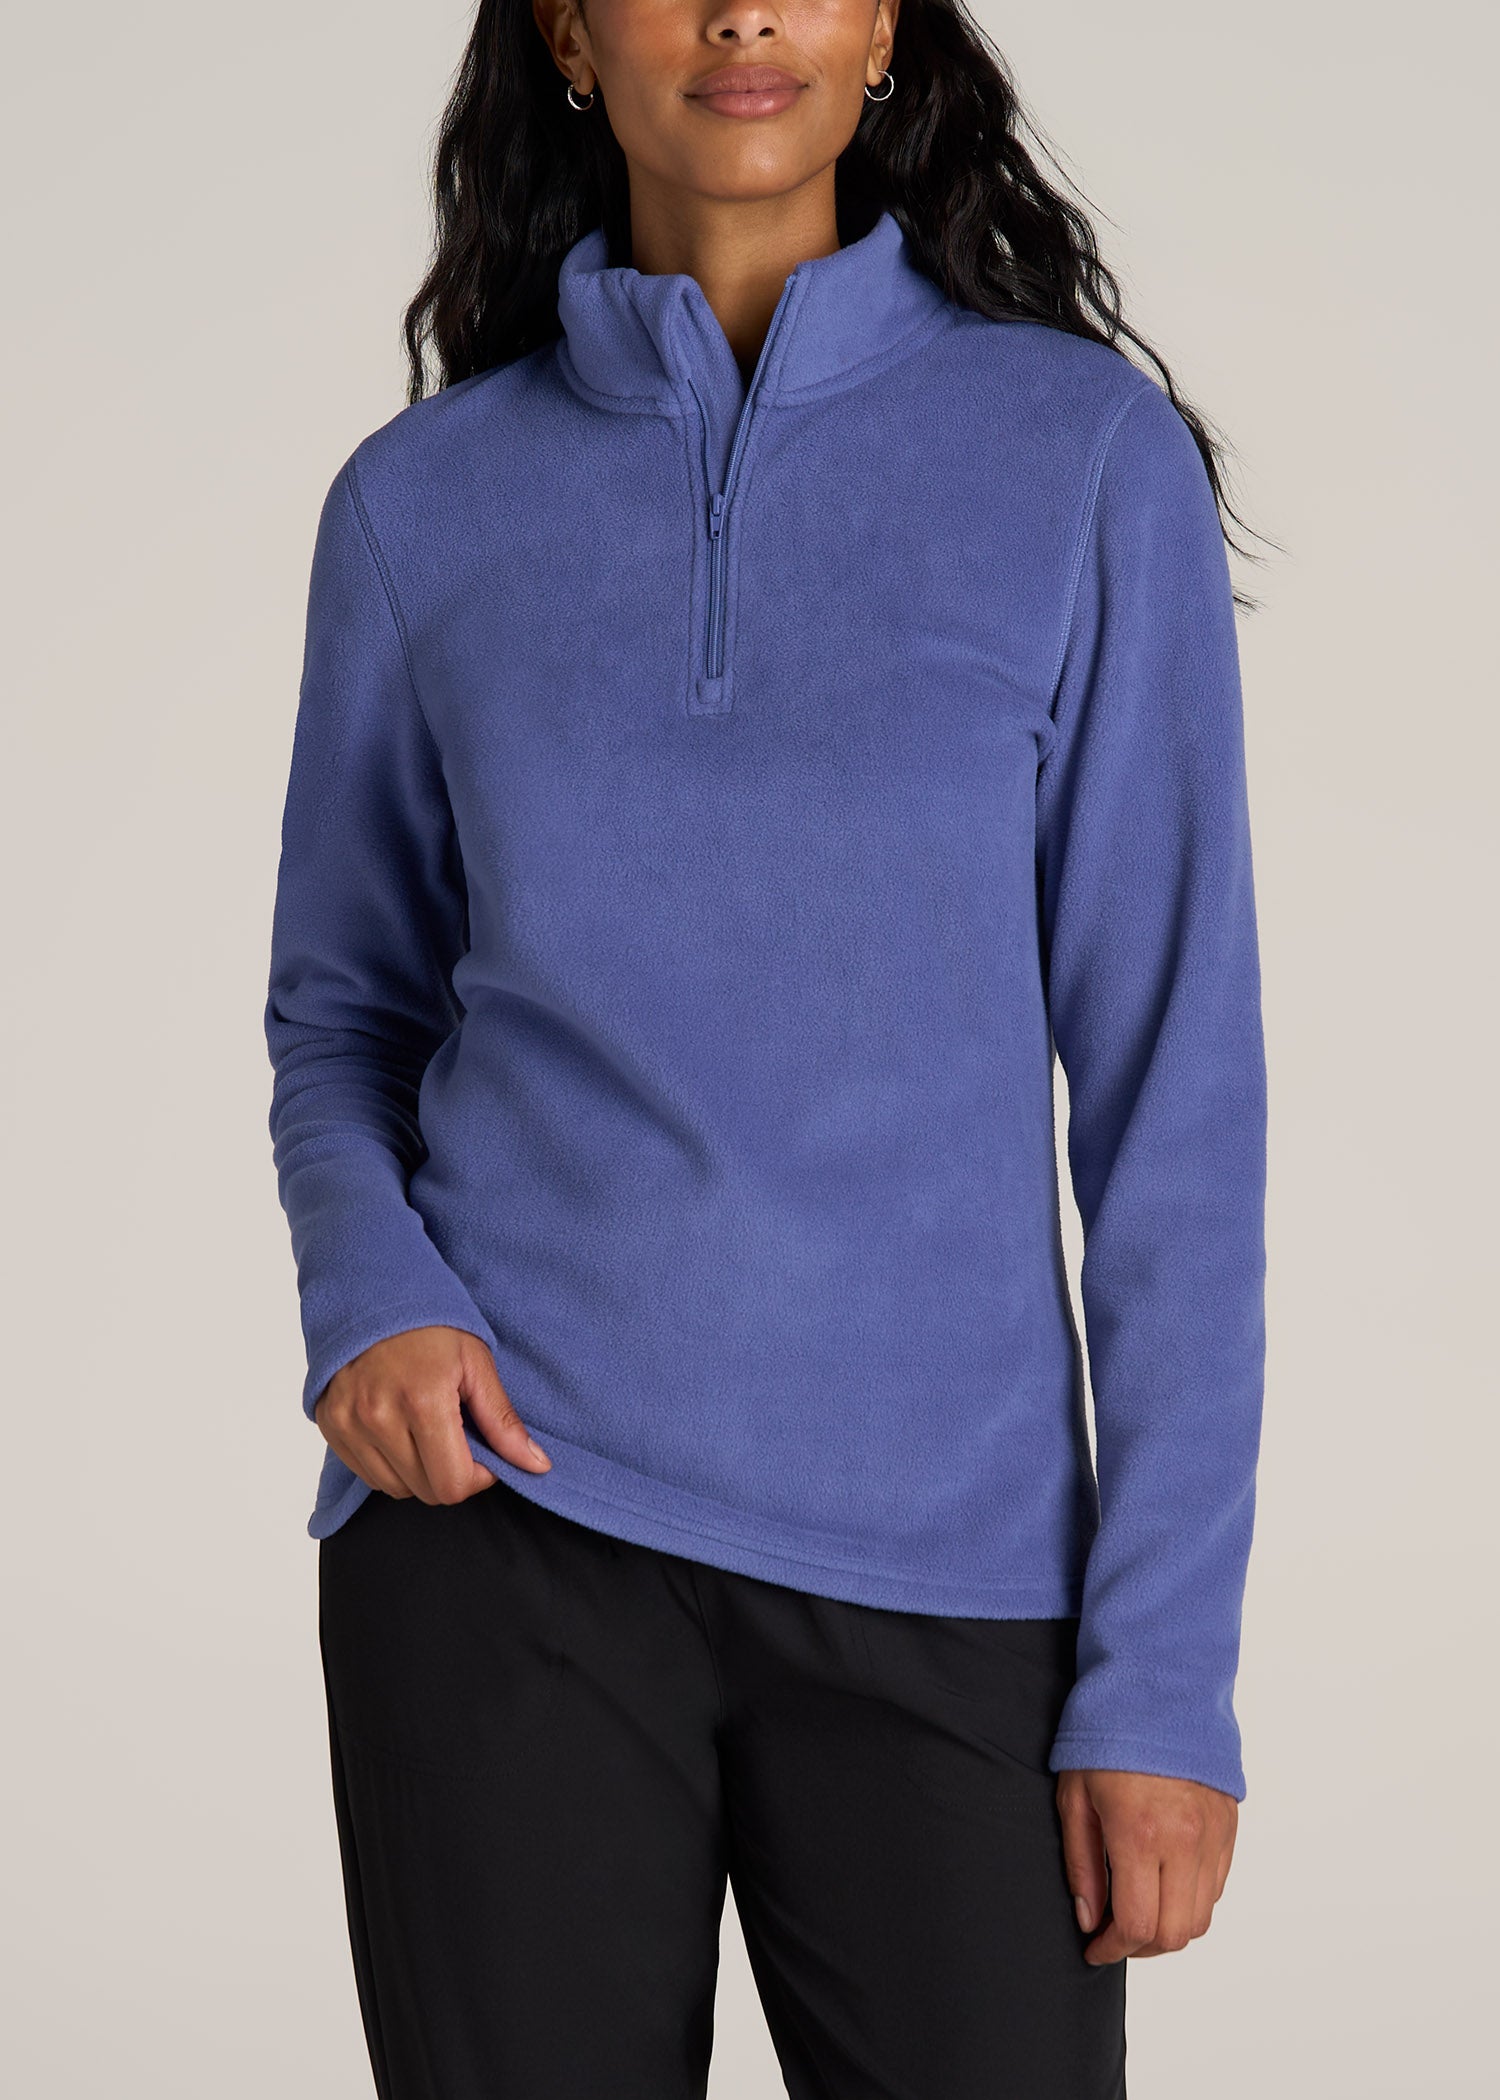 Half Zip Polar Fleece Pullover Sweater for Tall Women in Marlin Blue